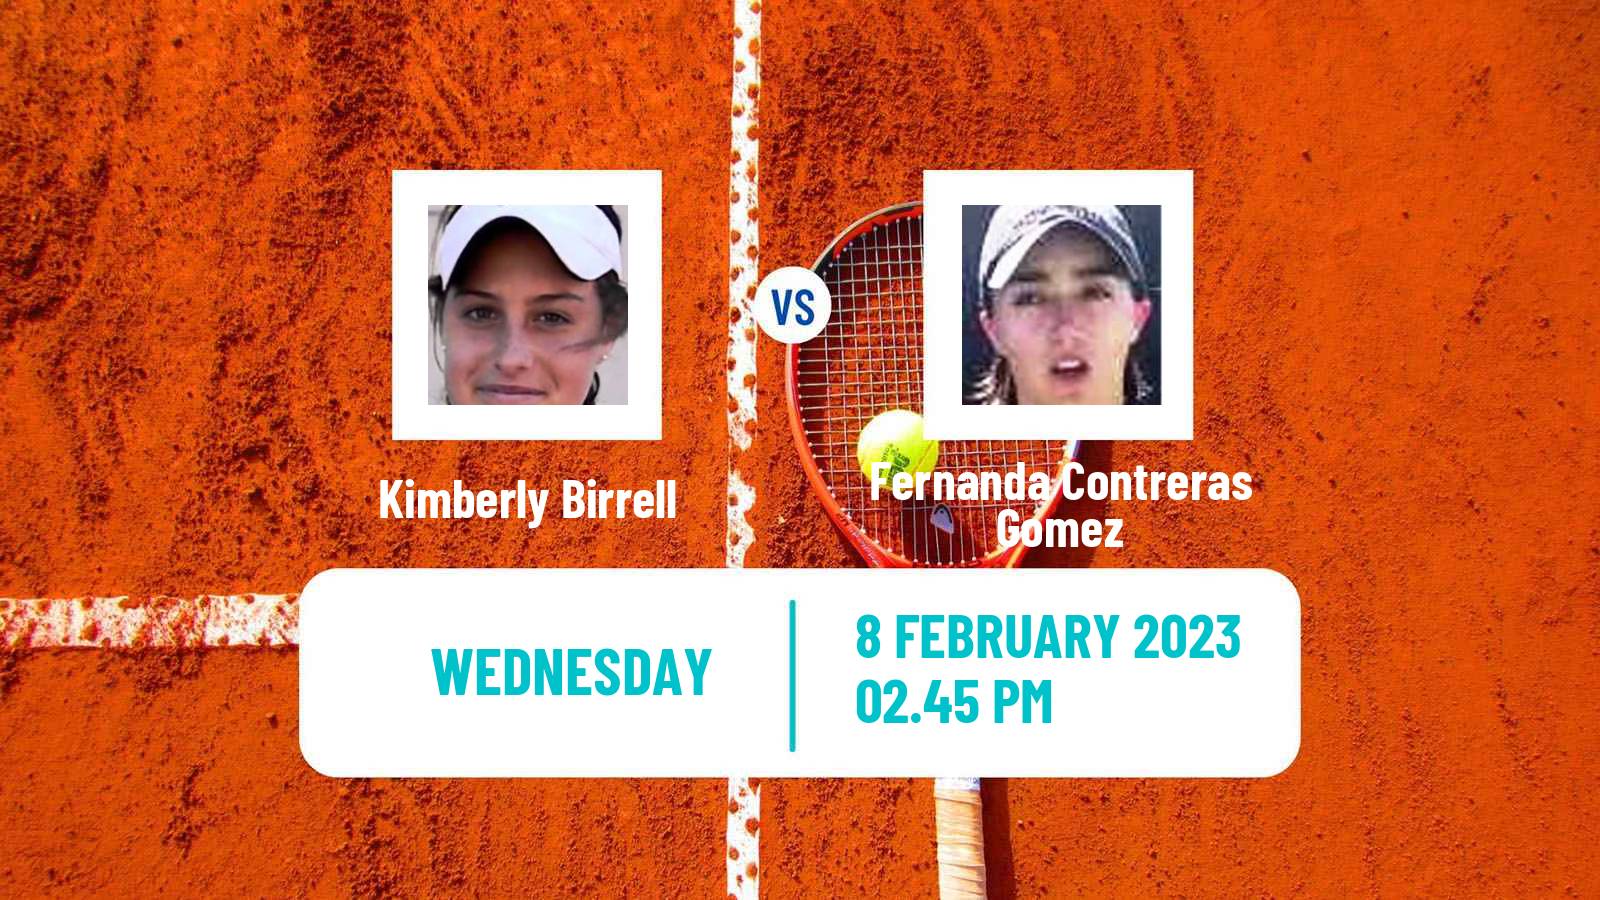 Tennis ITF Tournaments Kimberly Birrell - Fernanda Contreras Gomez